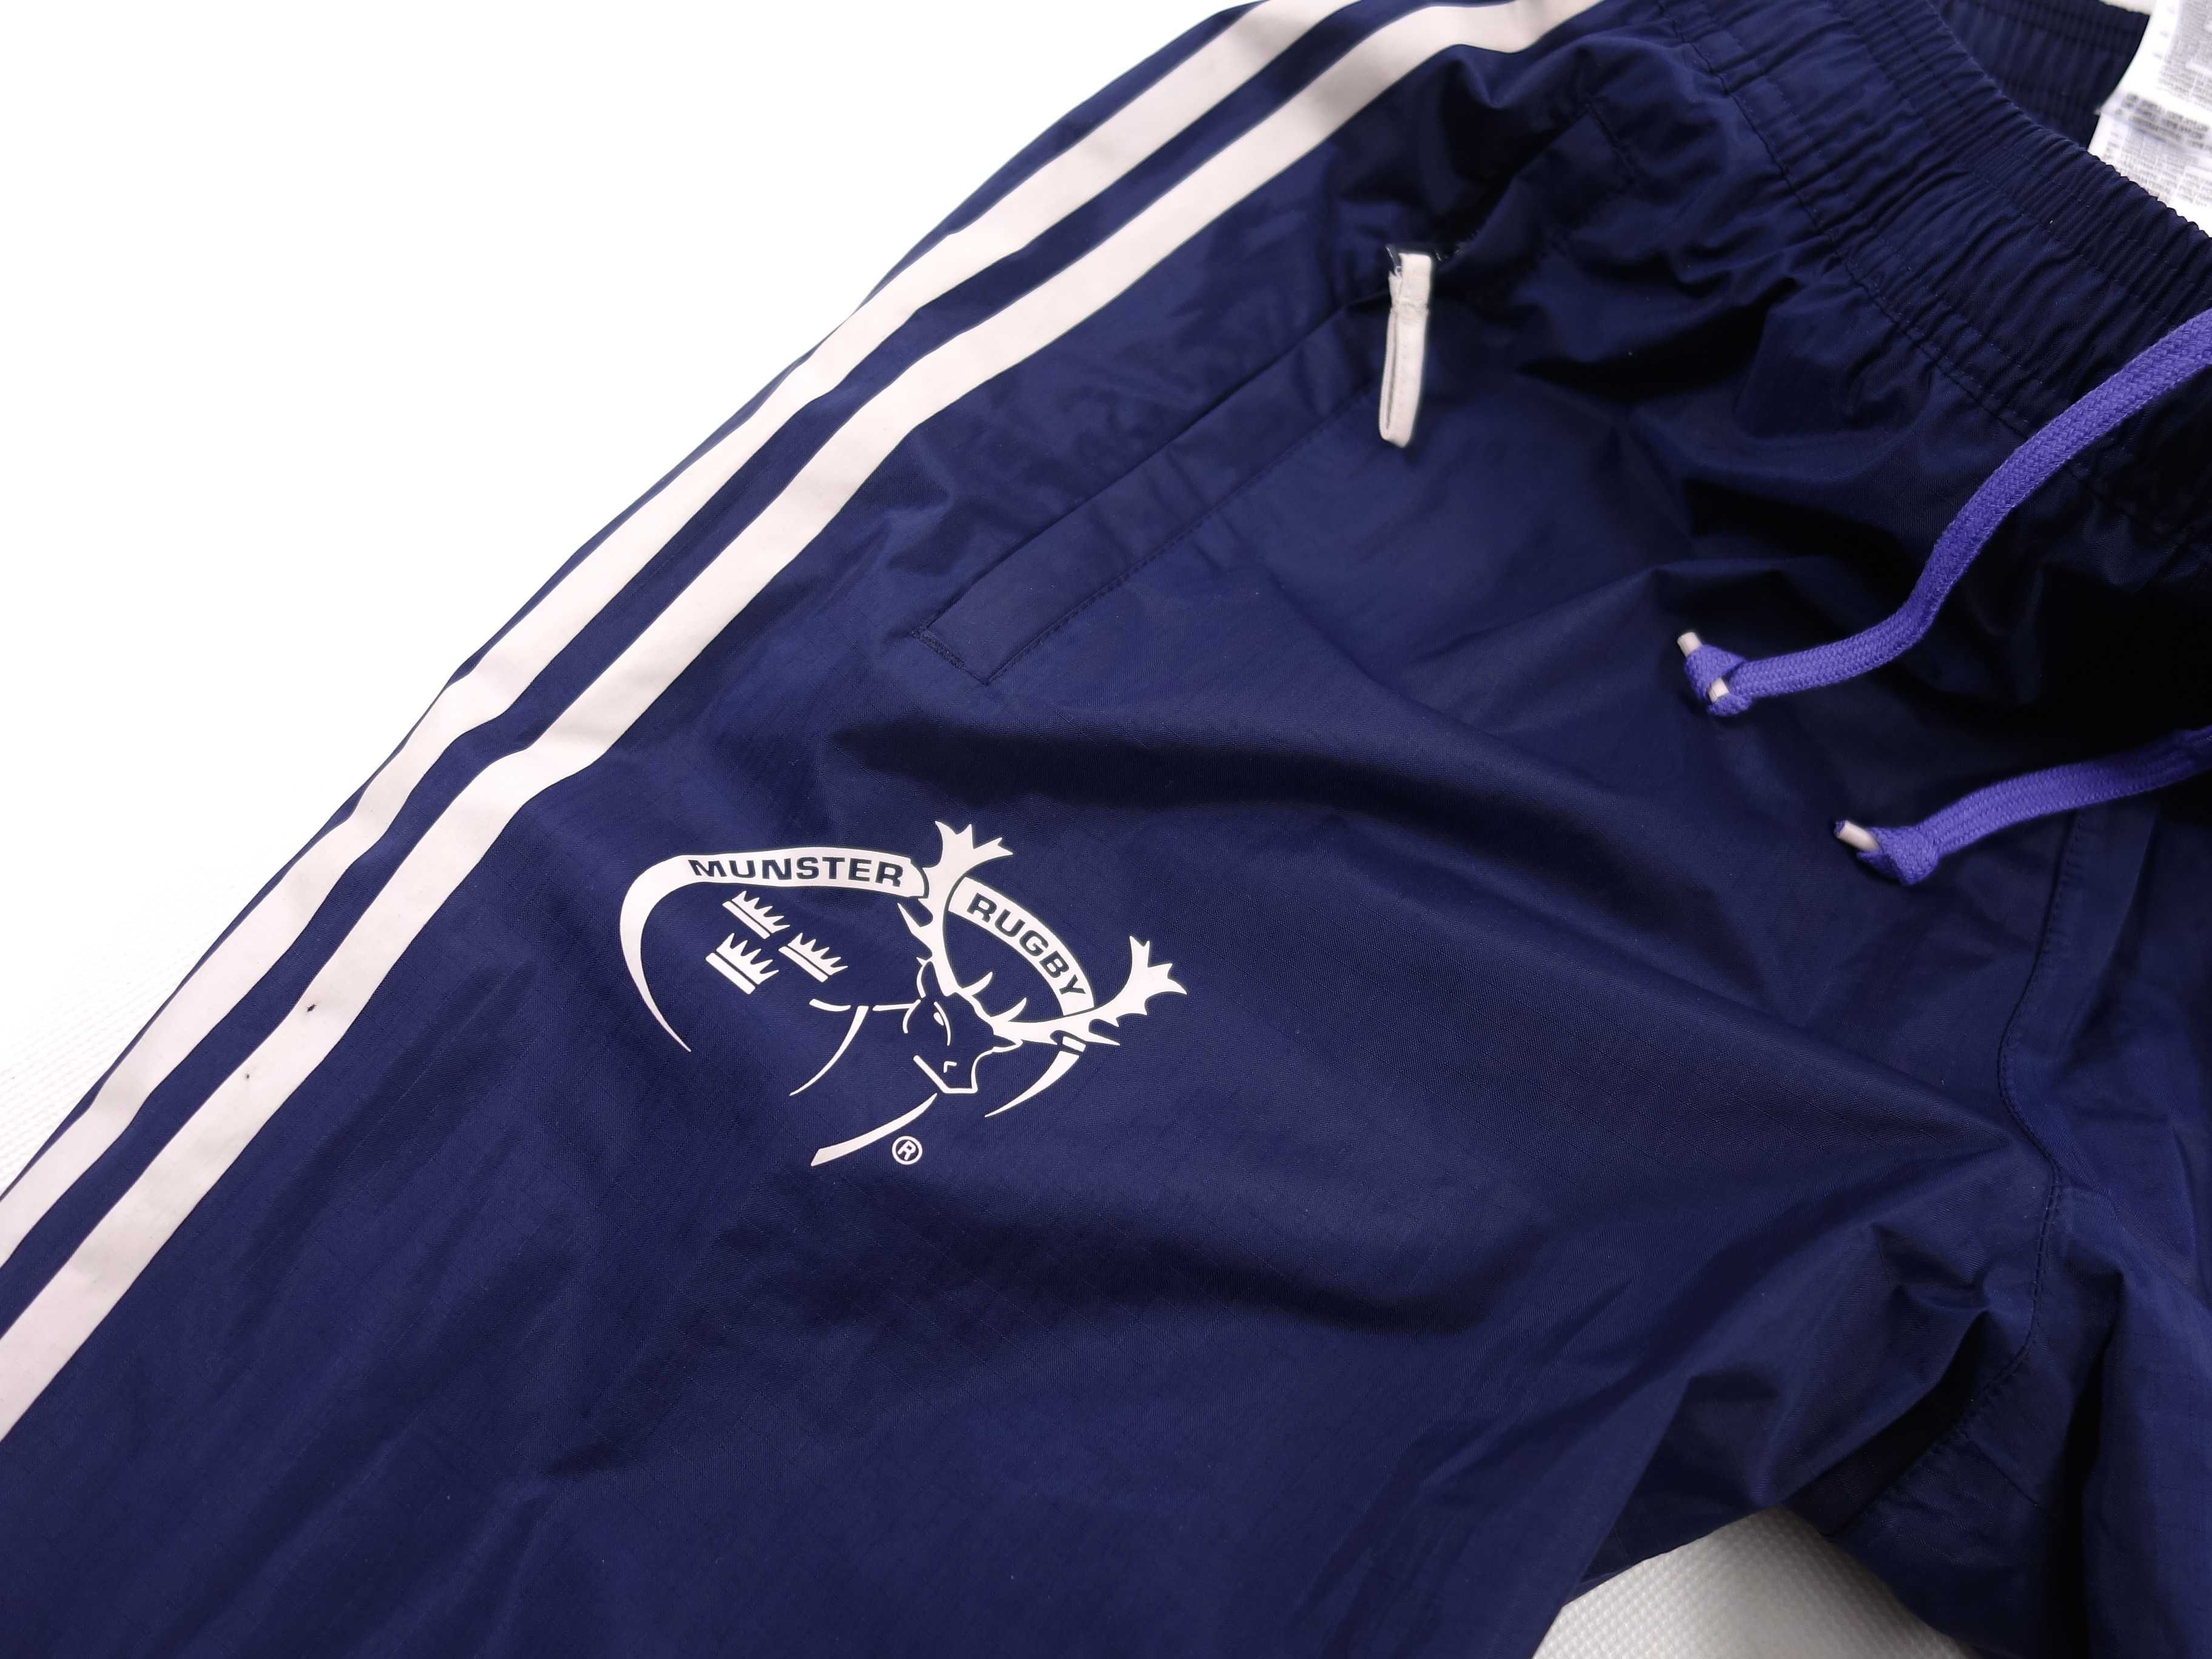 Adidas Rugby Monster MUNSTER męskie spodnie dresowe M/L